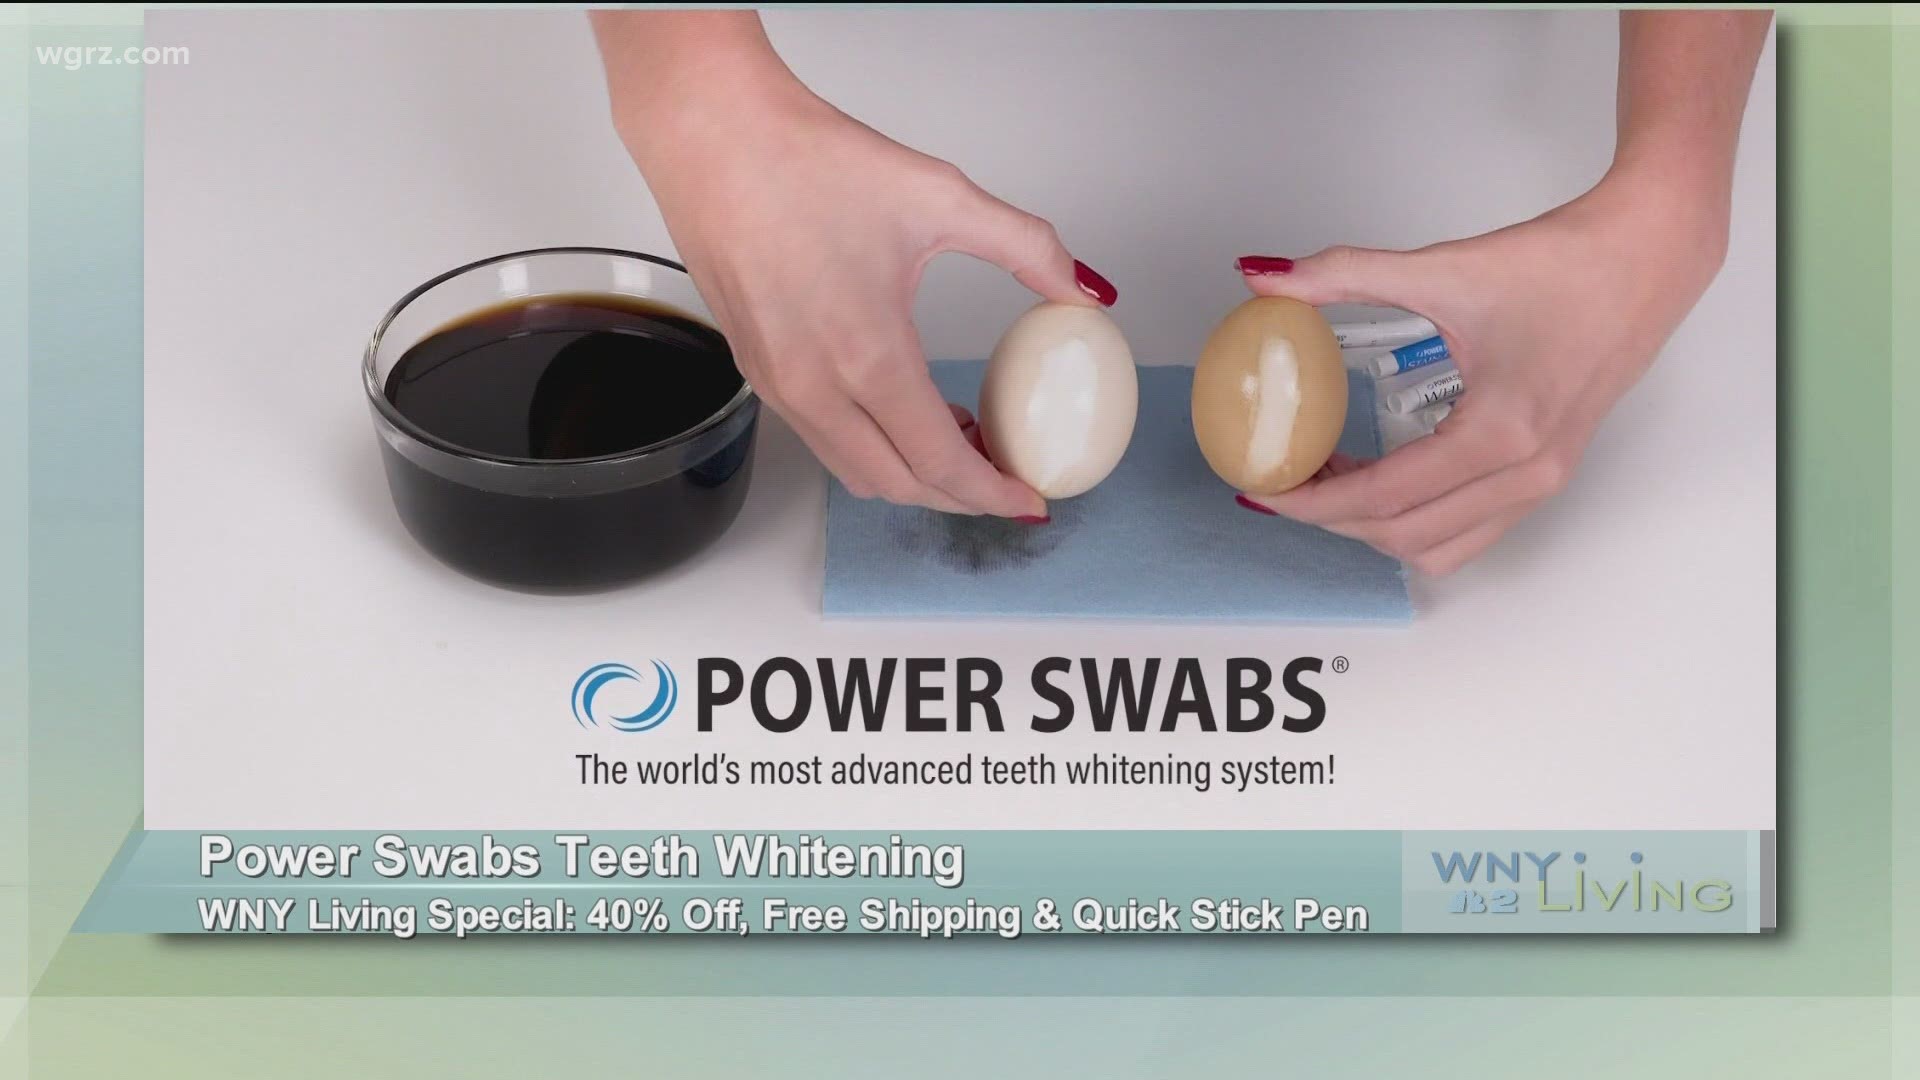 WNY Living - February 20 - Power Swabs Teeth Whitening (THIS VIDEO IS SPONSORED BY POWER SWABS TEETH WHITENING)